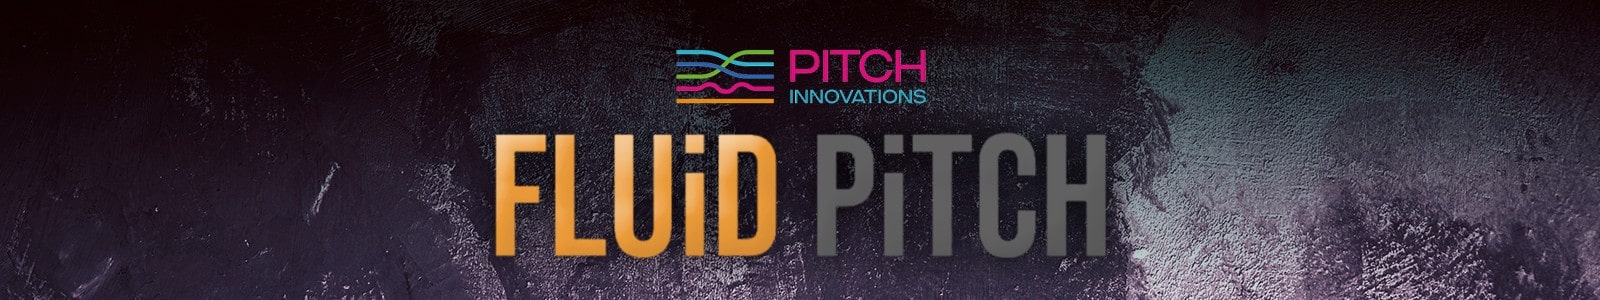 Pitch Innovations Fluid Pitch